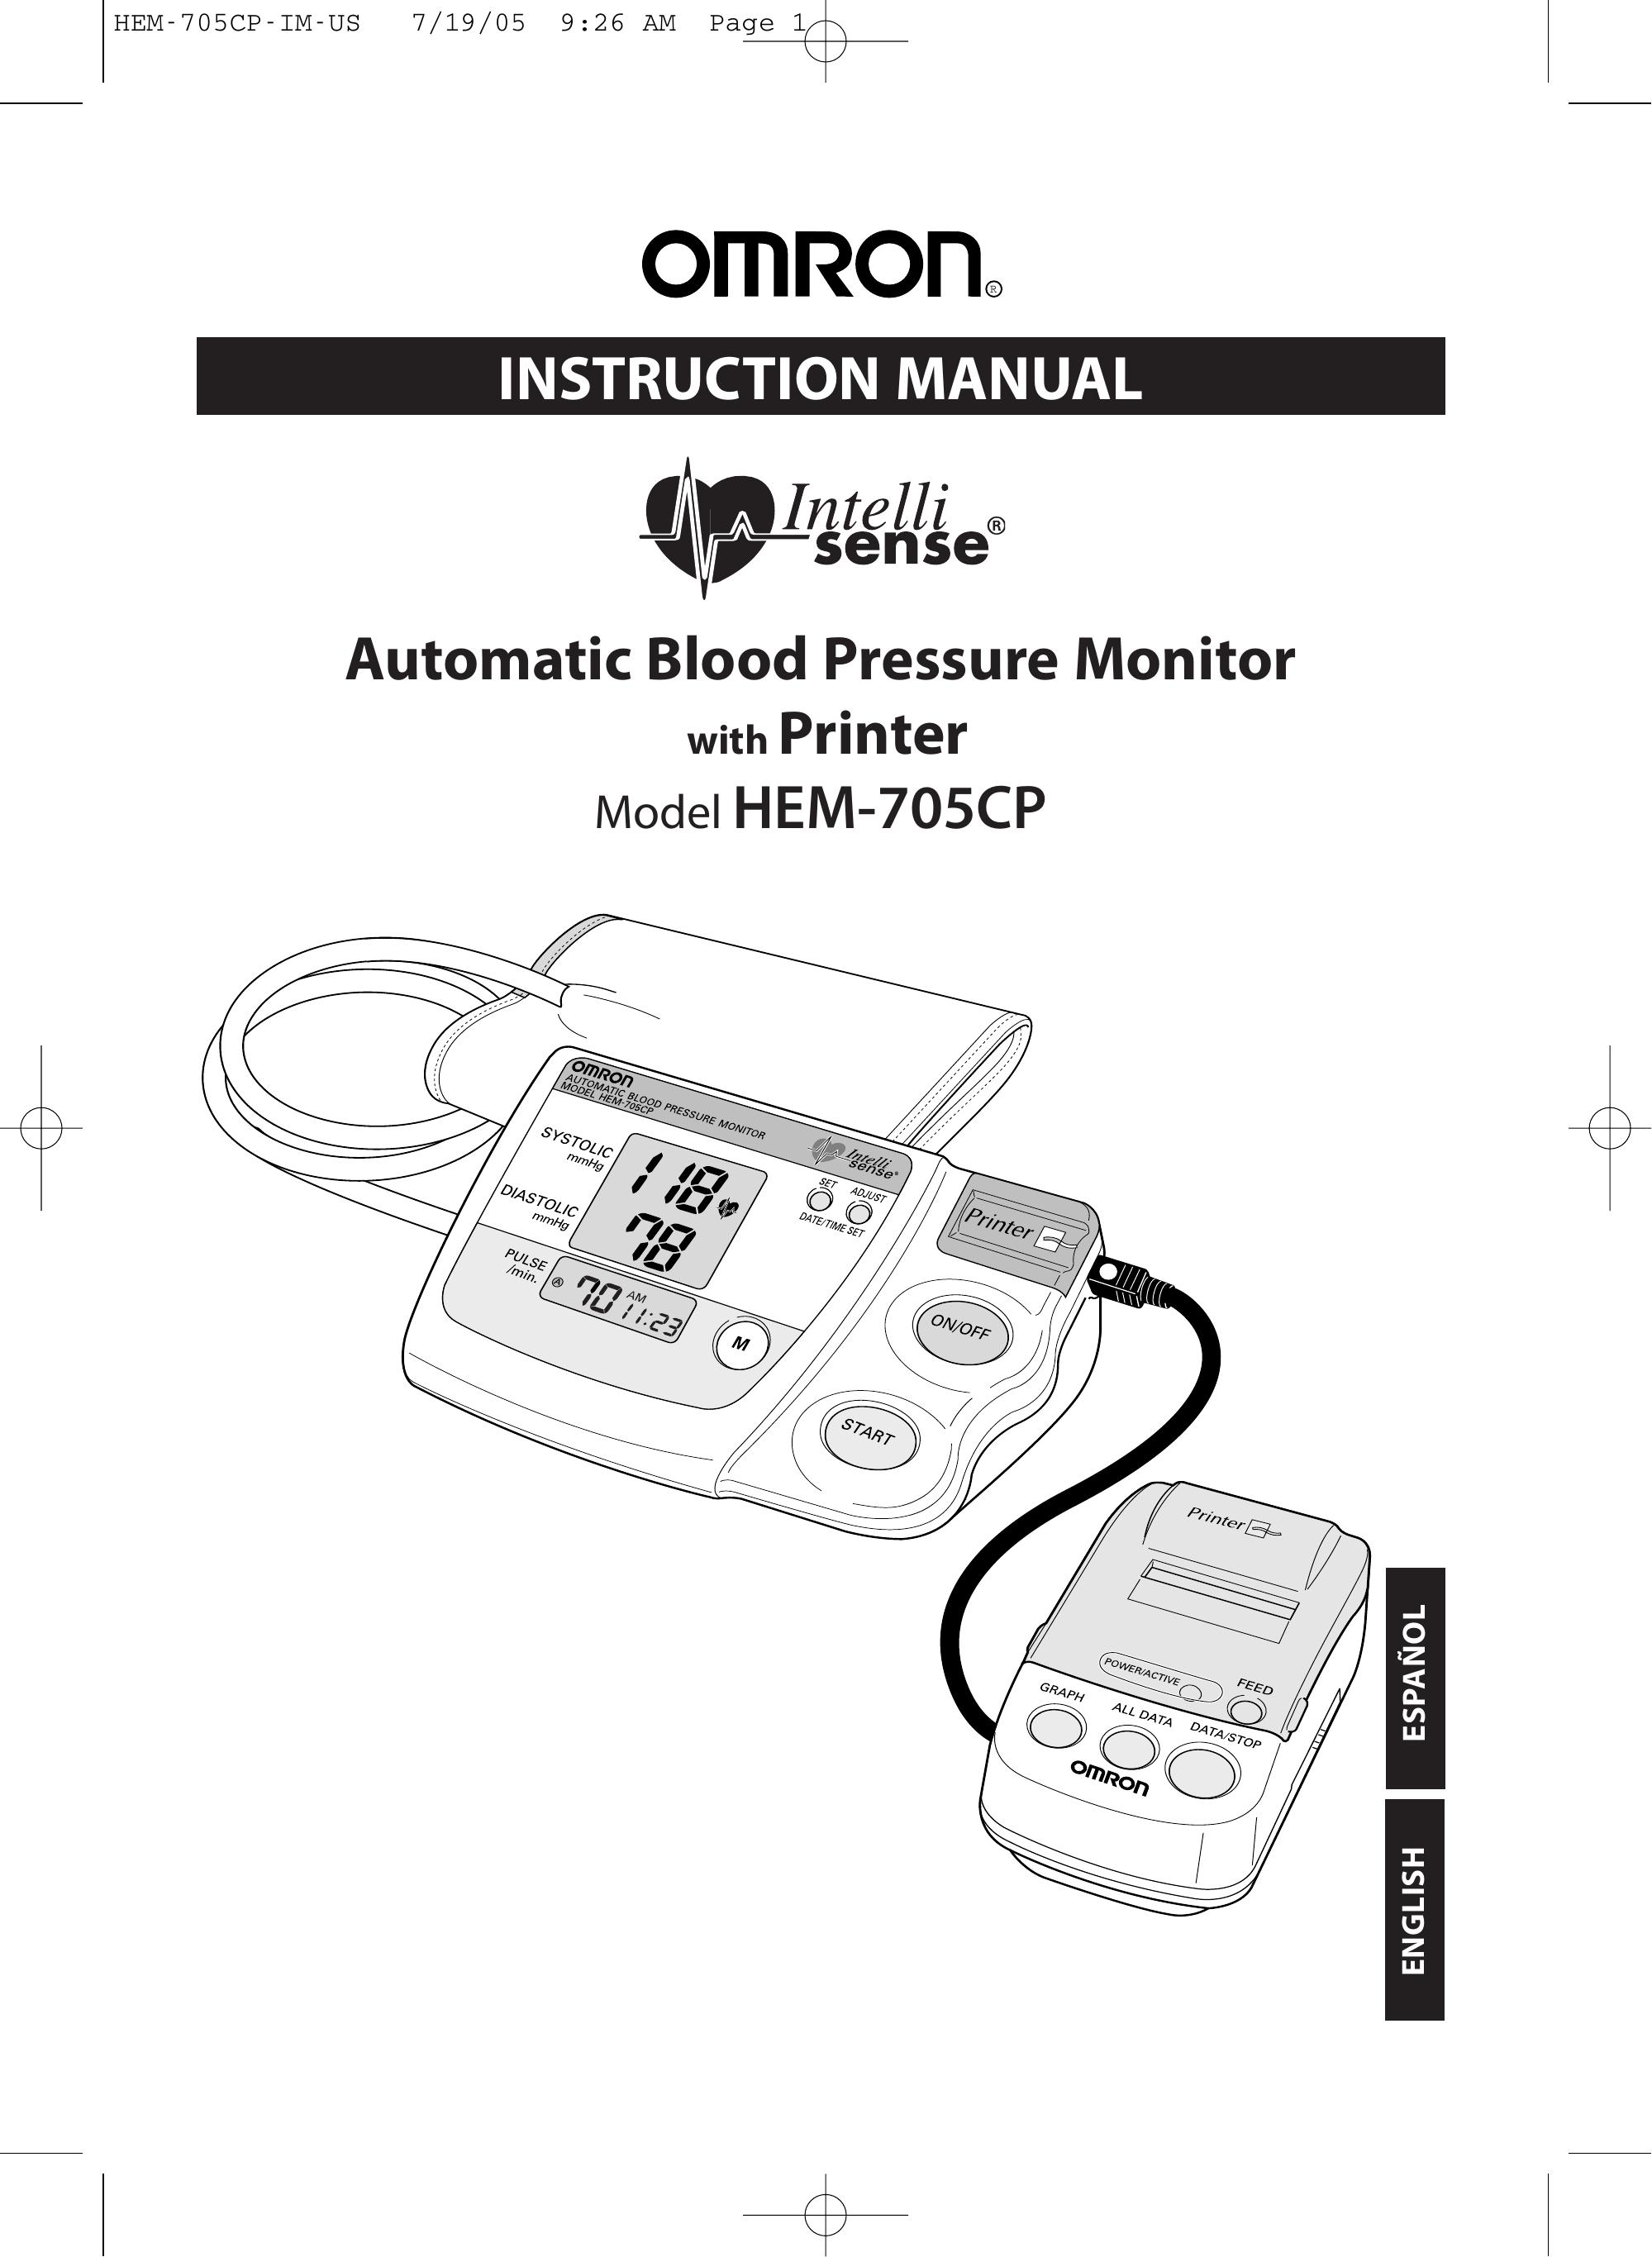 Omron Healthcare HEM-705CP Blood Pressure Monitor User Manual